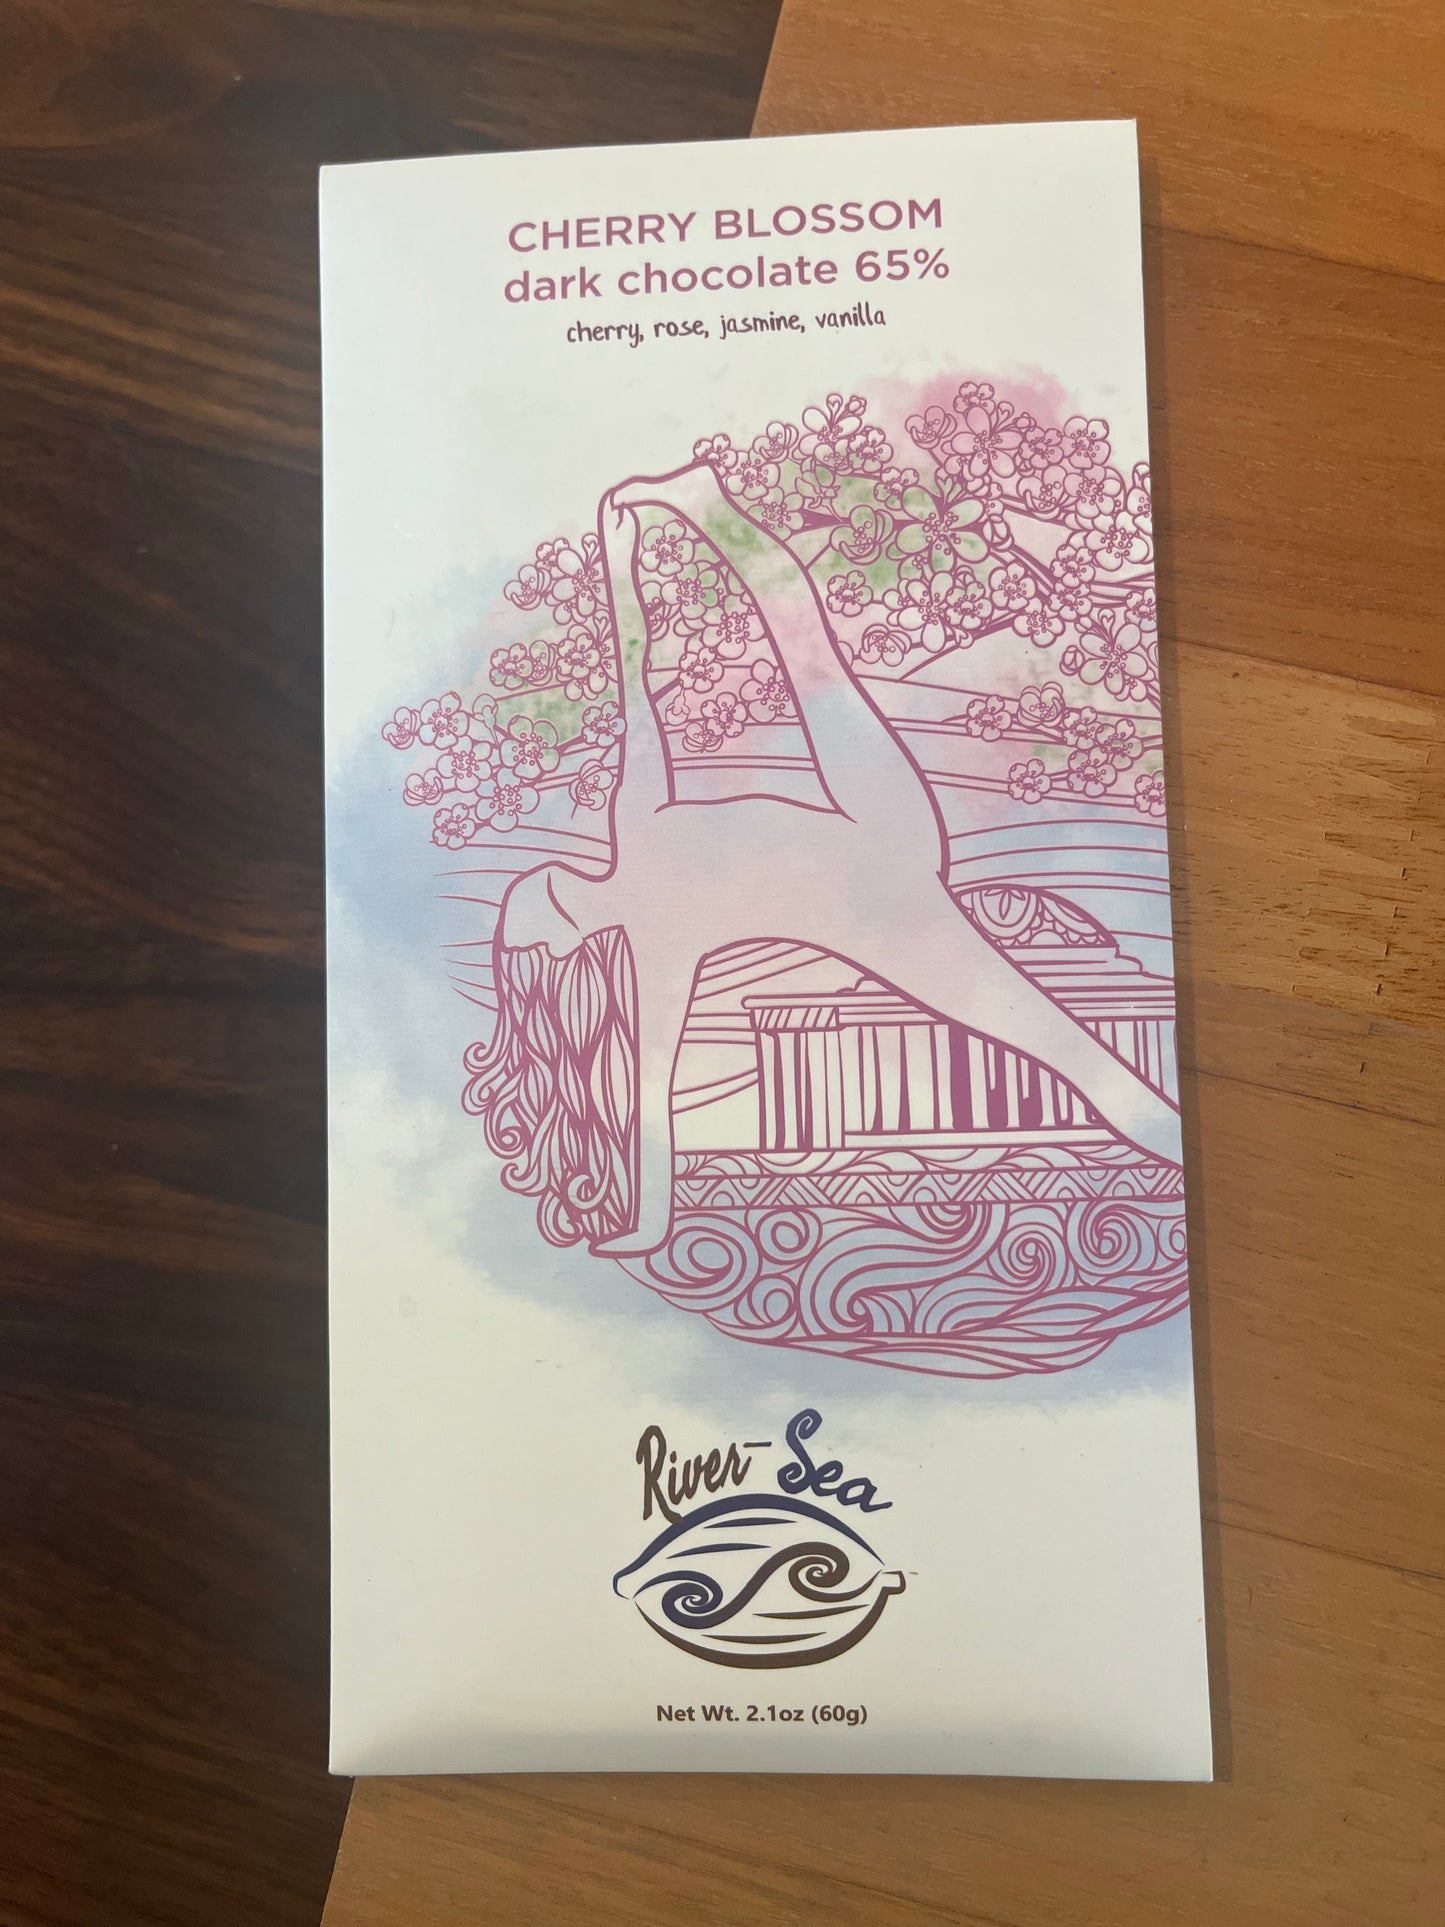 River Sea Chocolate 65% dark cherry blossom